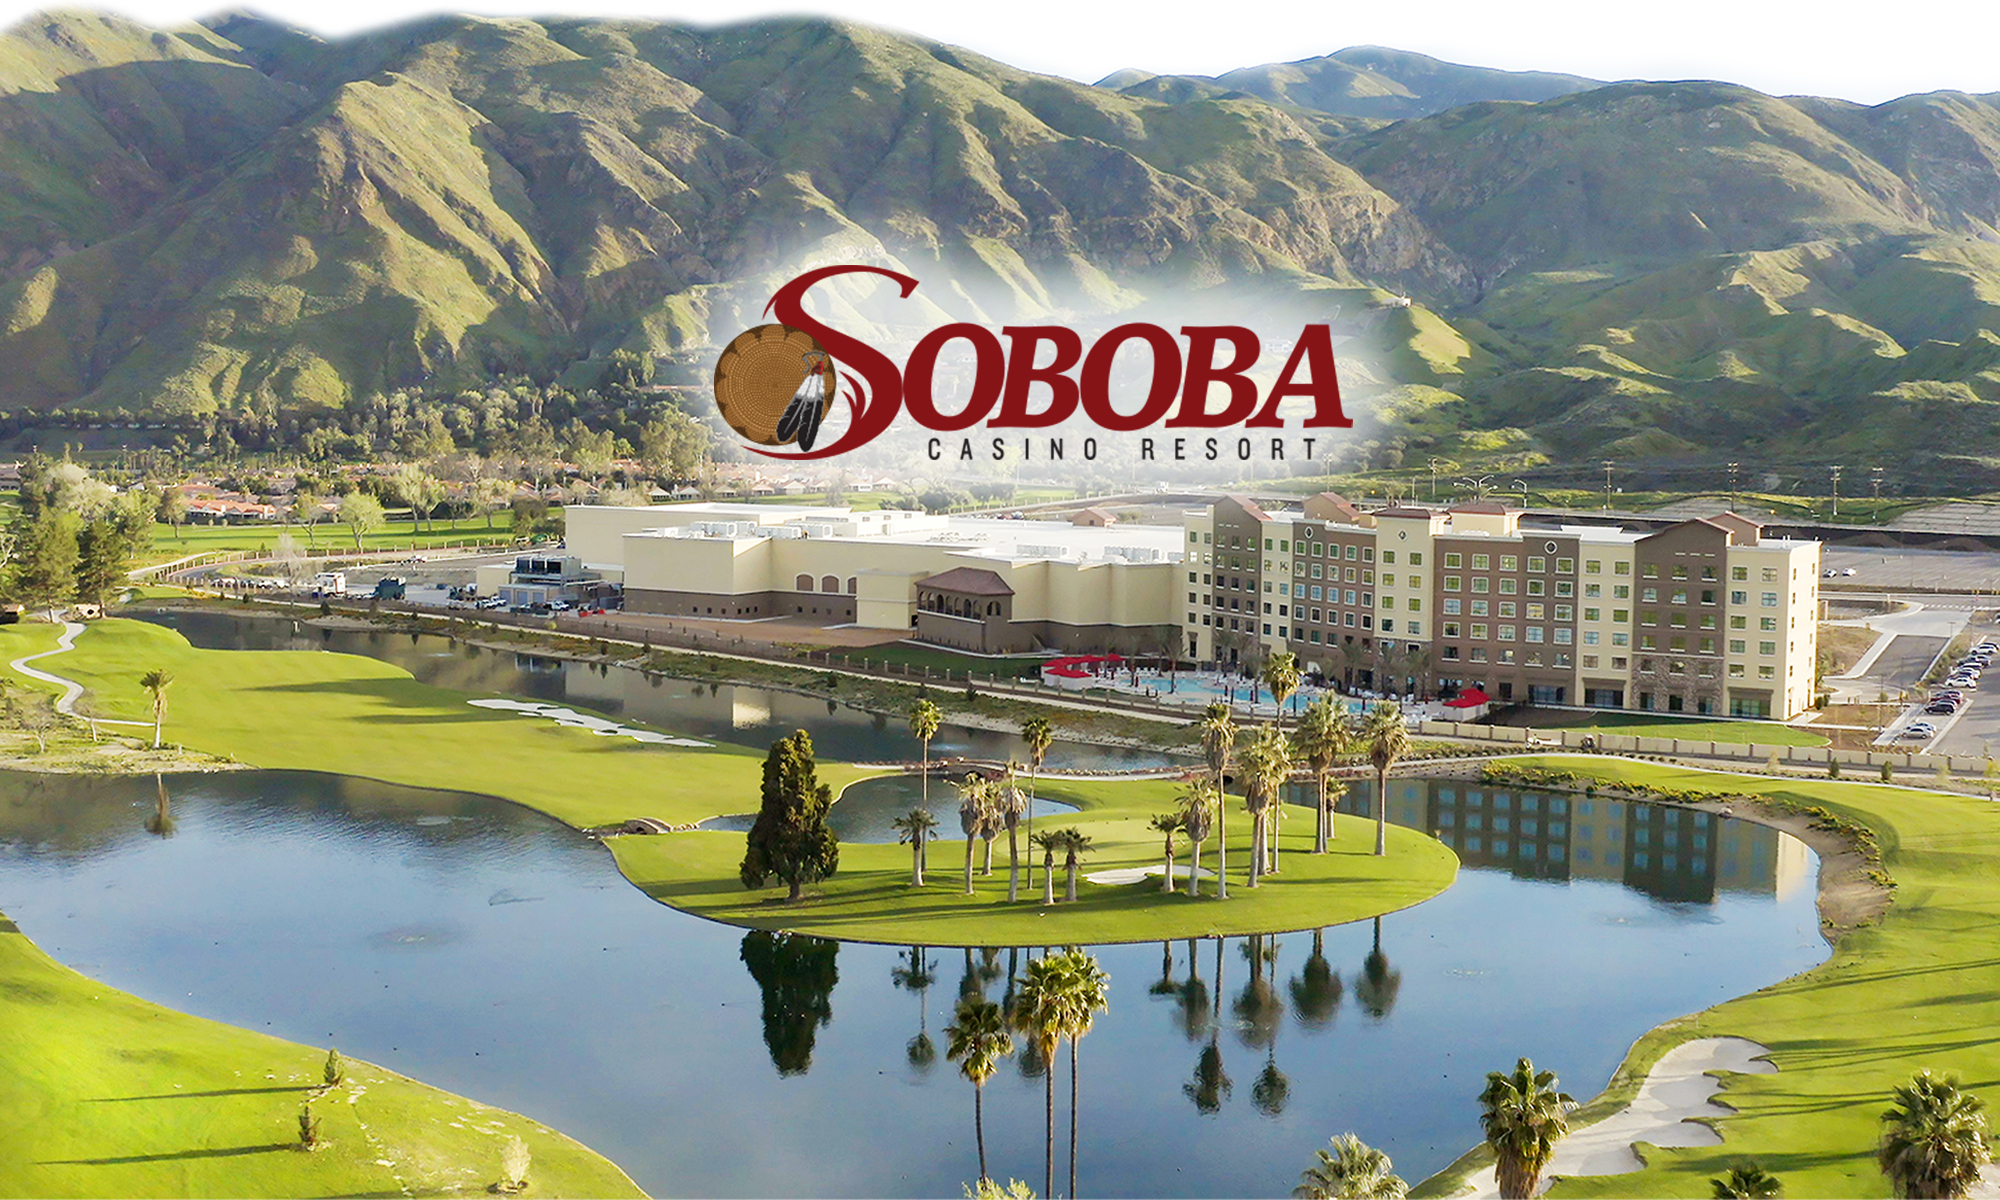 Soboba Sports Complex shines - The Hemet & San Jacinto Chronicle